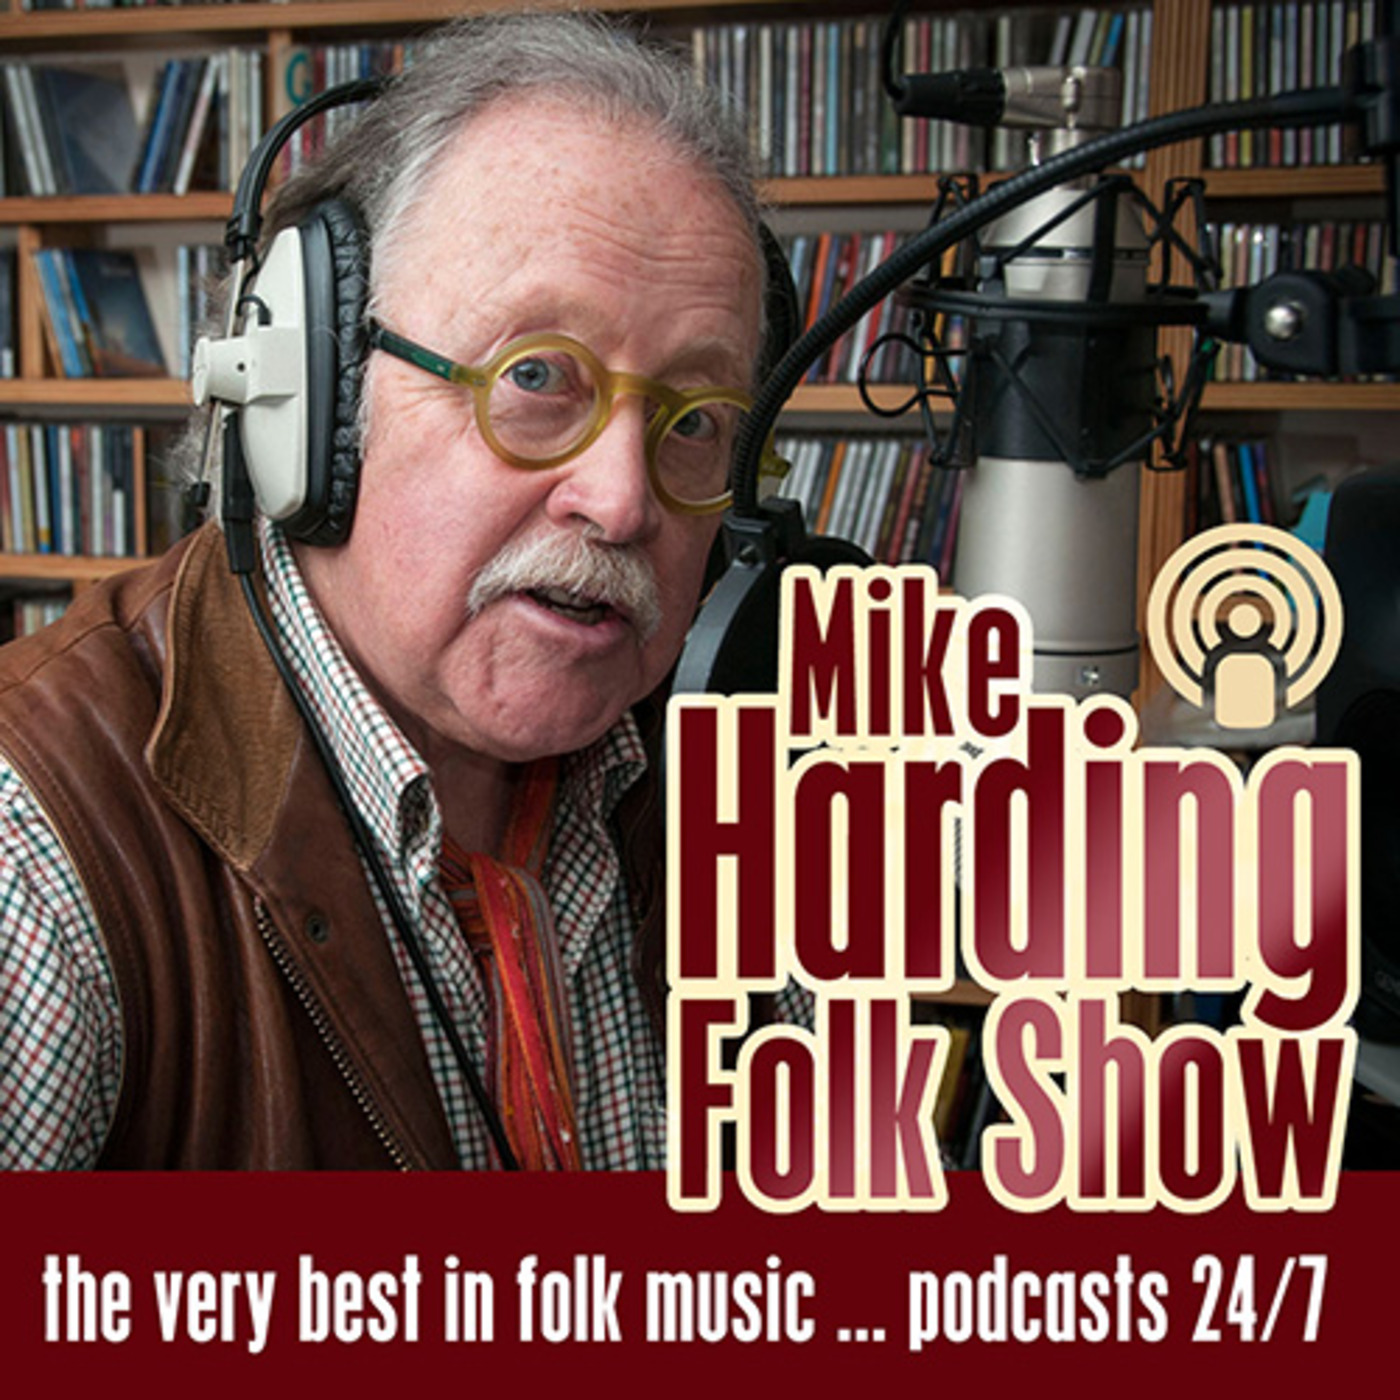 Mike Harding Folk Show 293